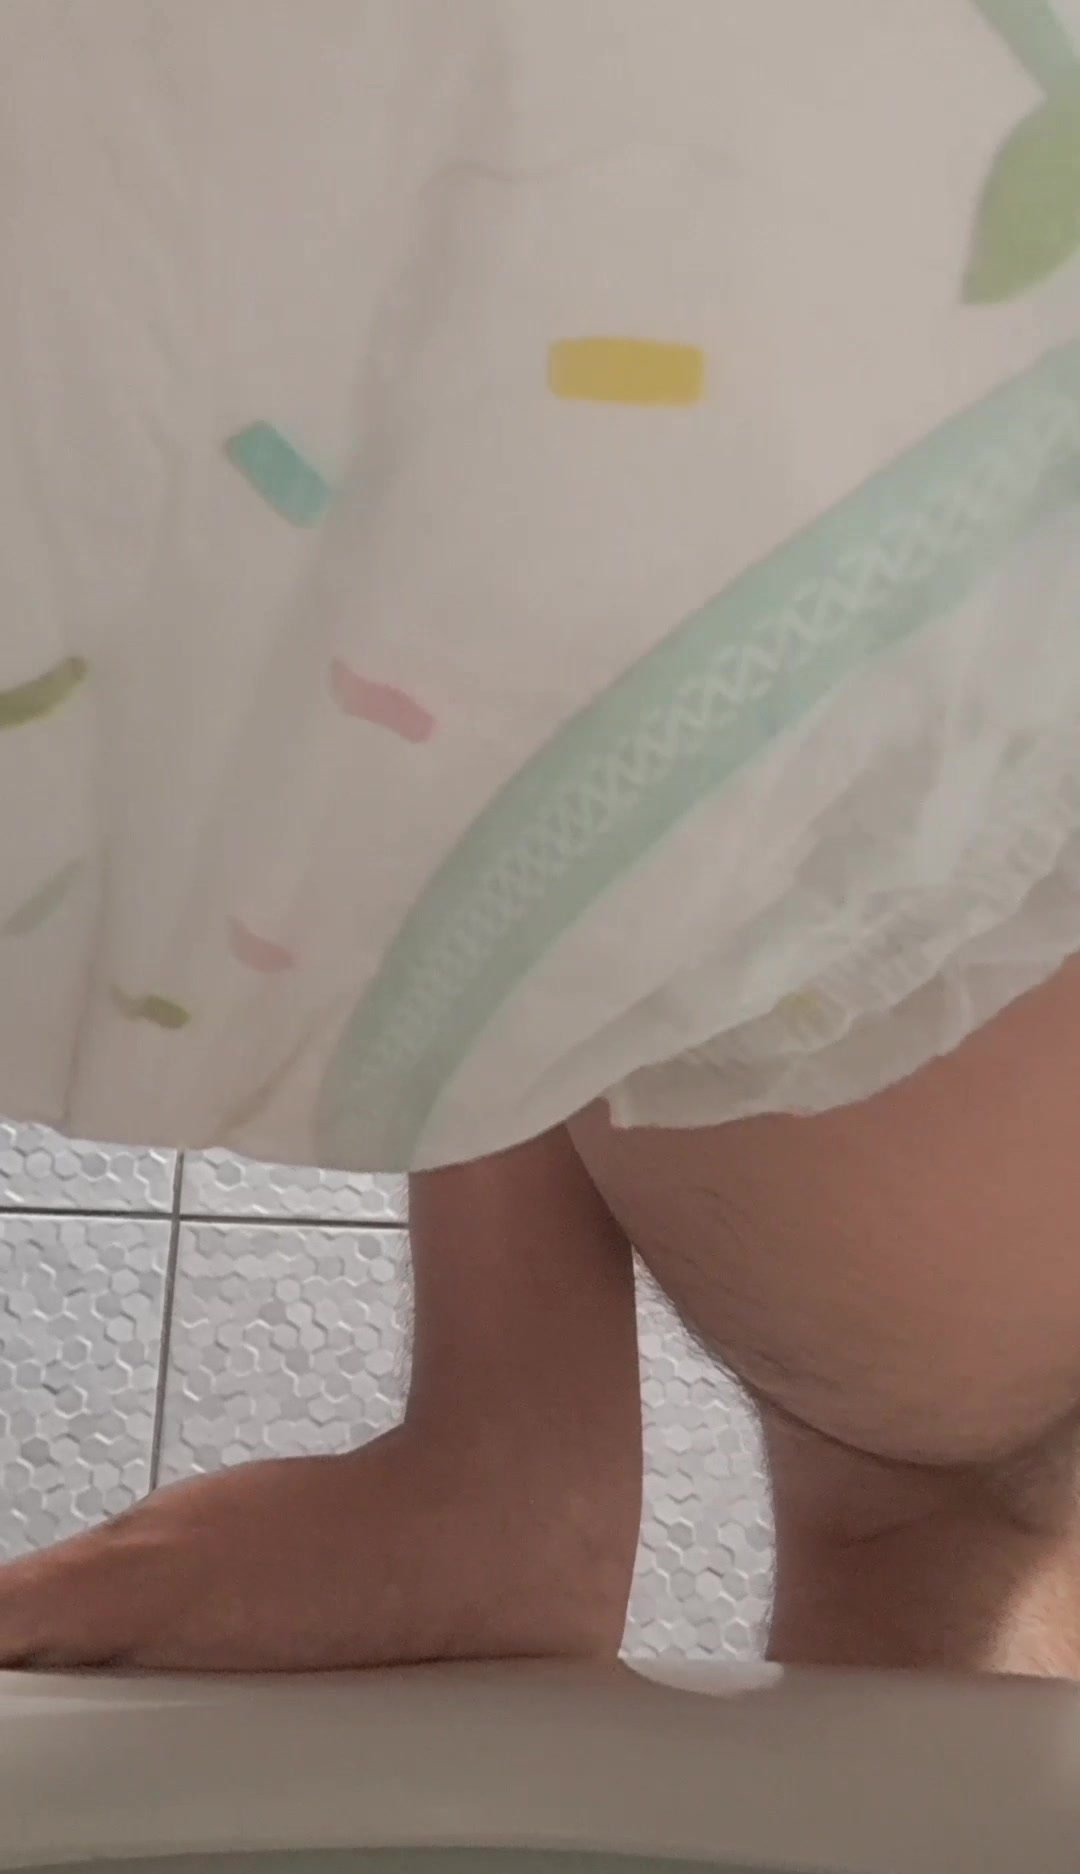 Pooping in my pampers diaper